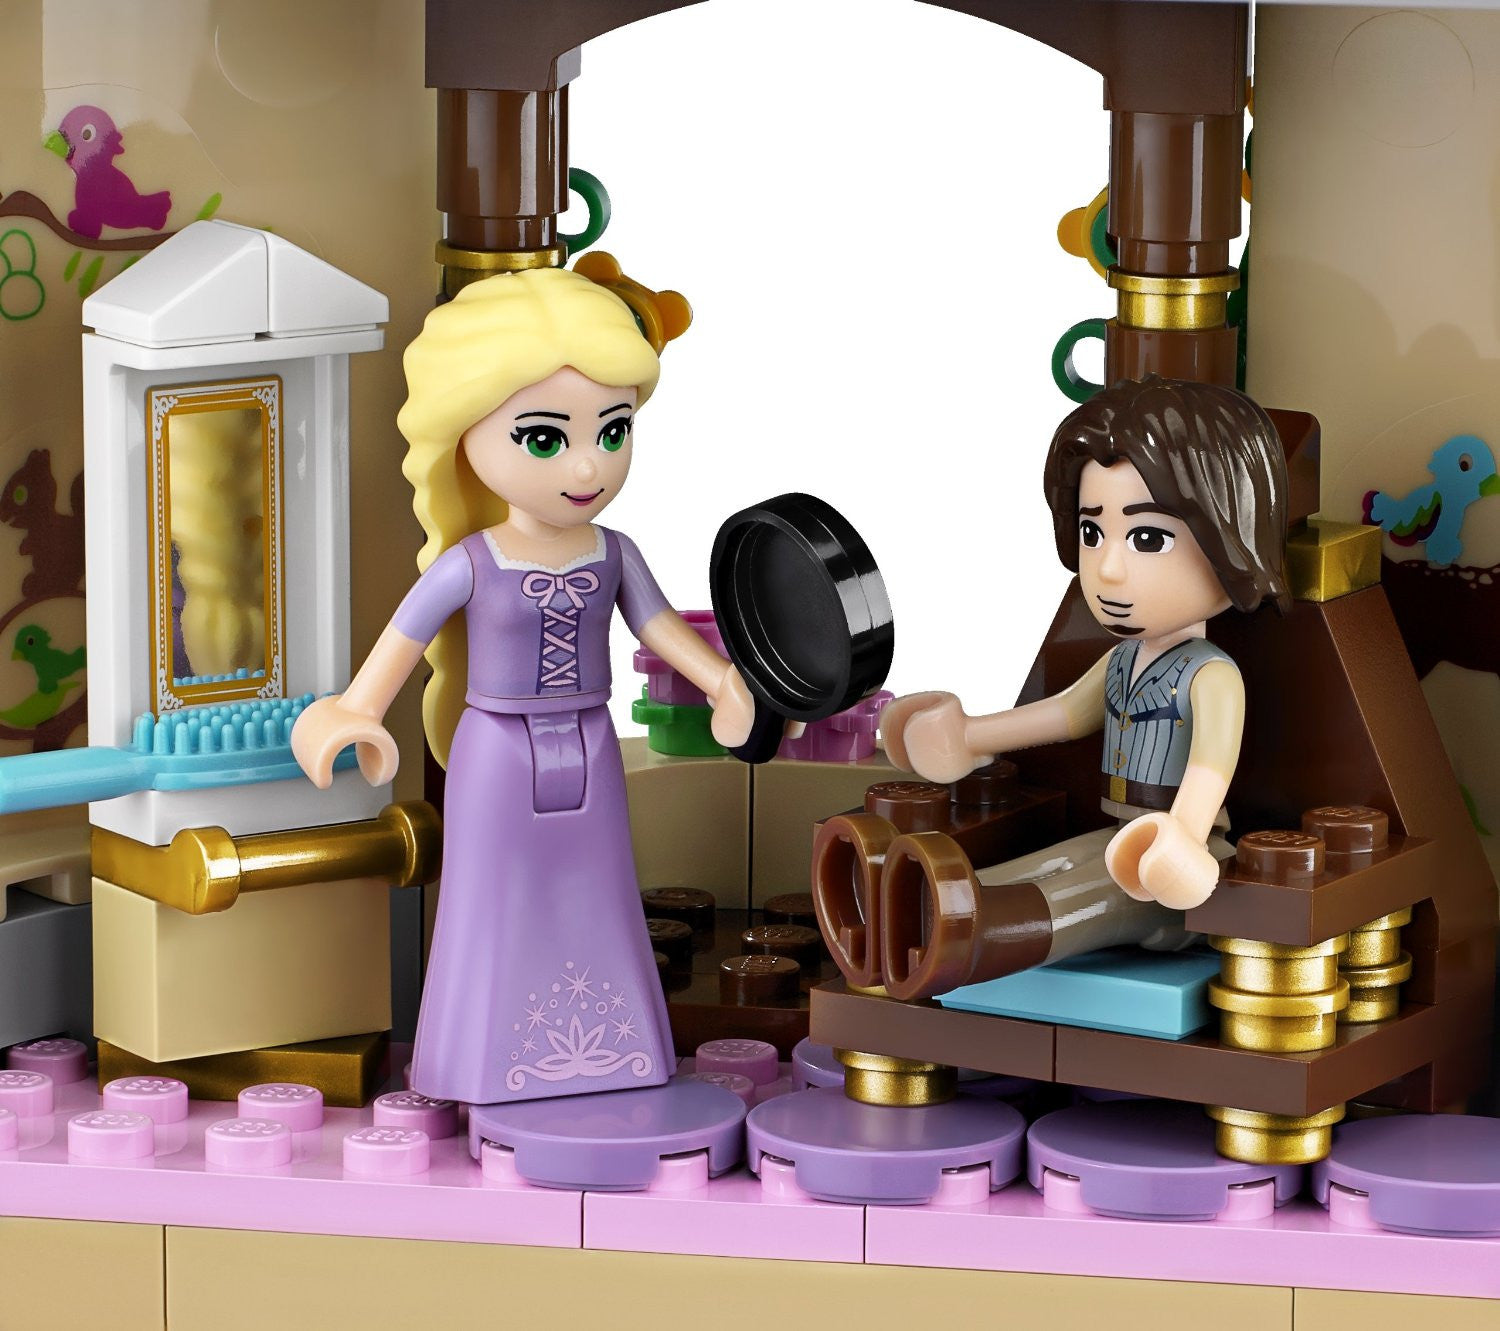 Lego Disney Princess Rapunzel's Creativity Tower Playset Toy - buy-online